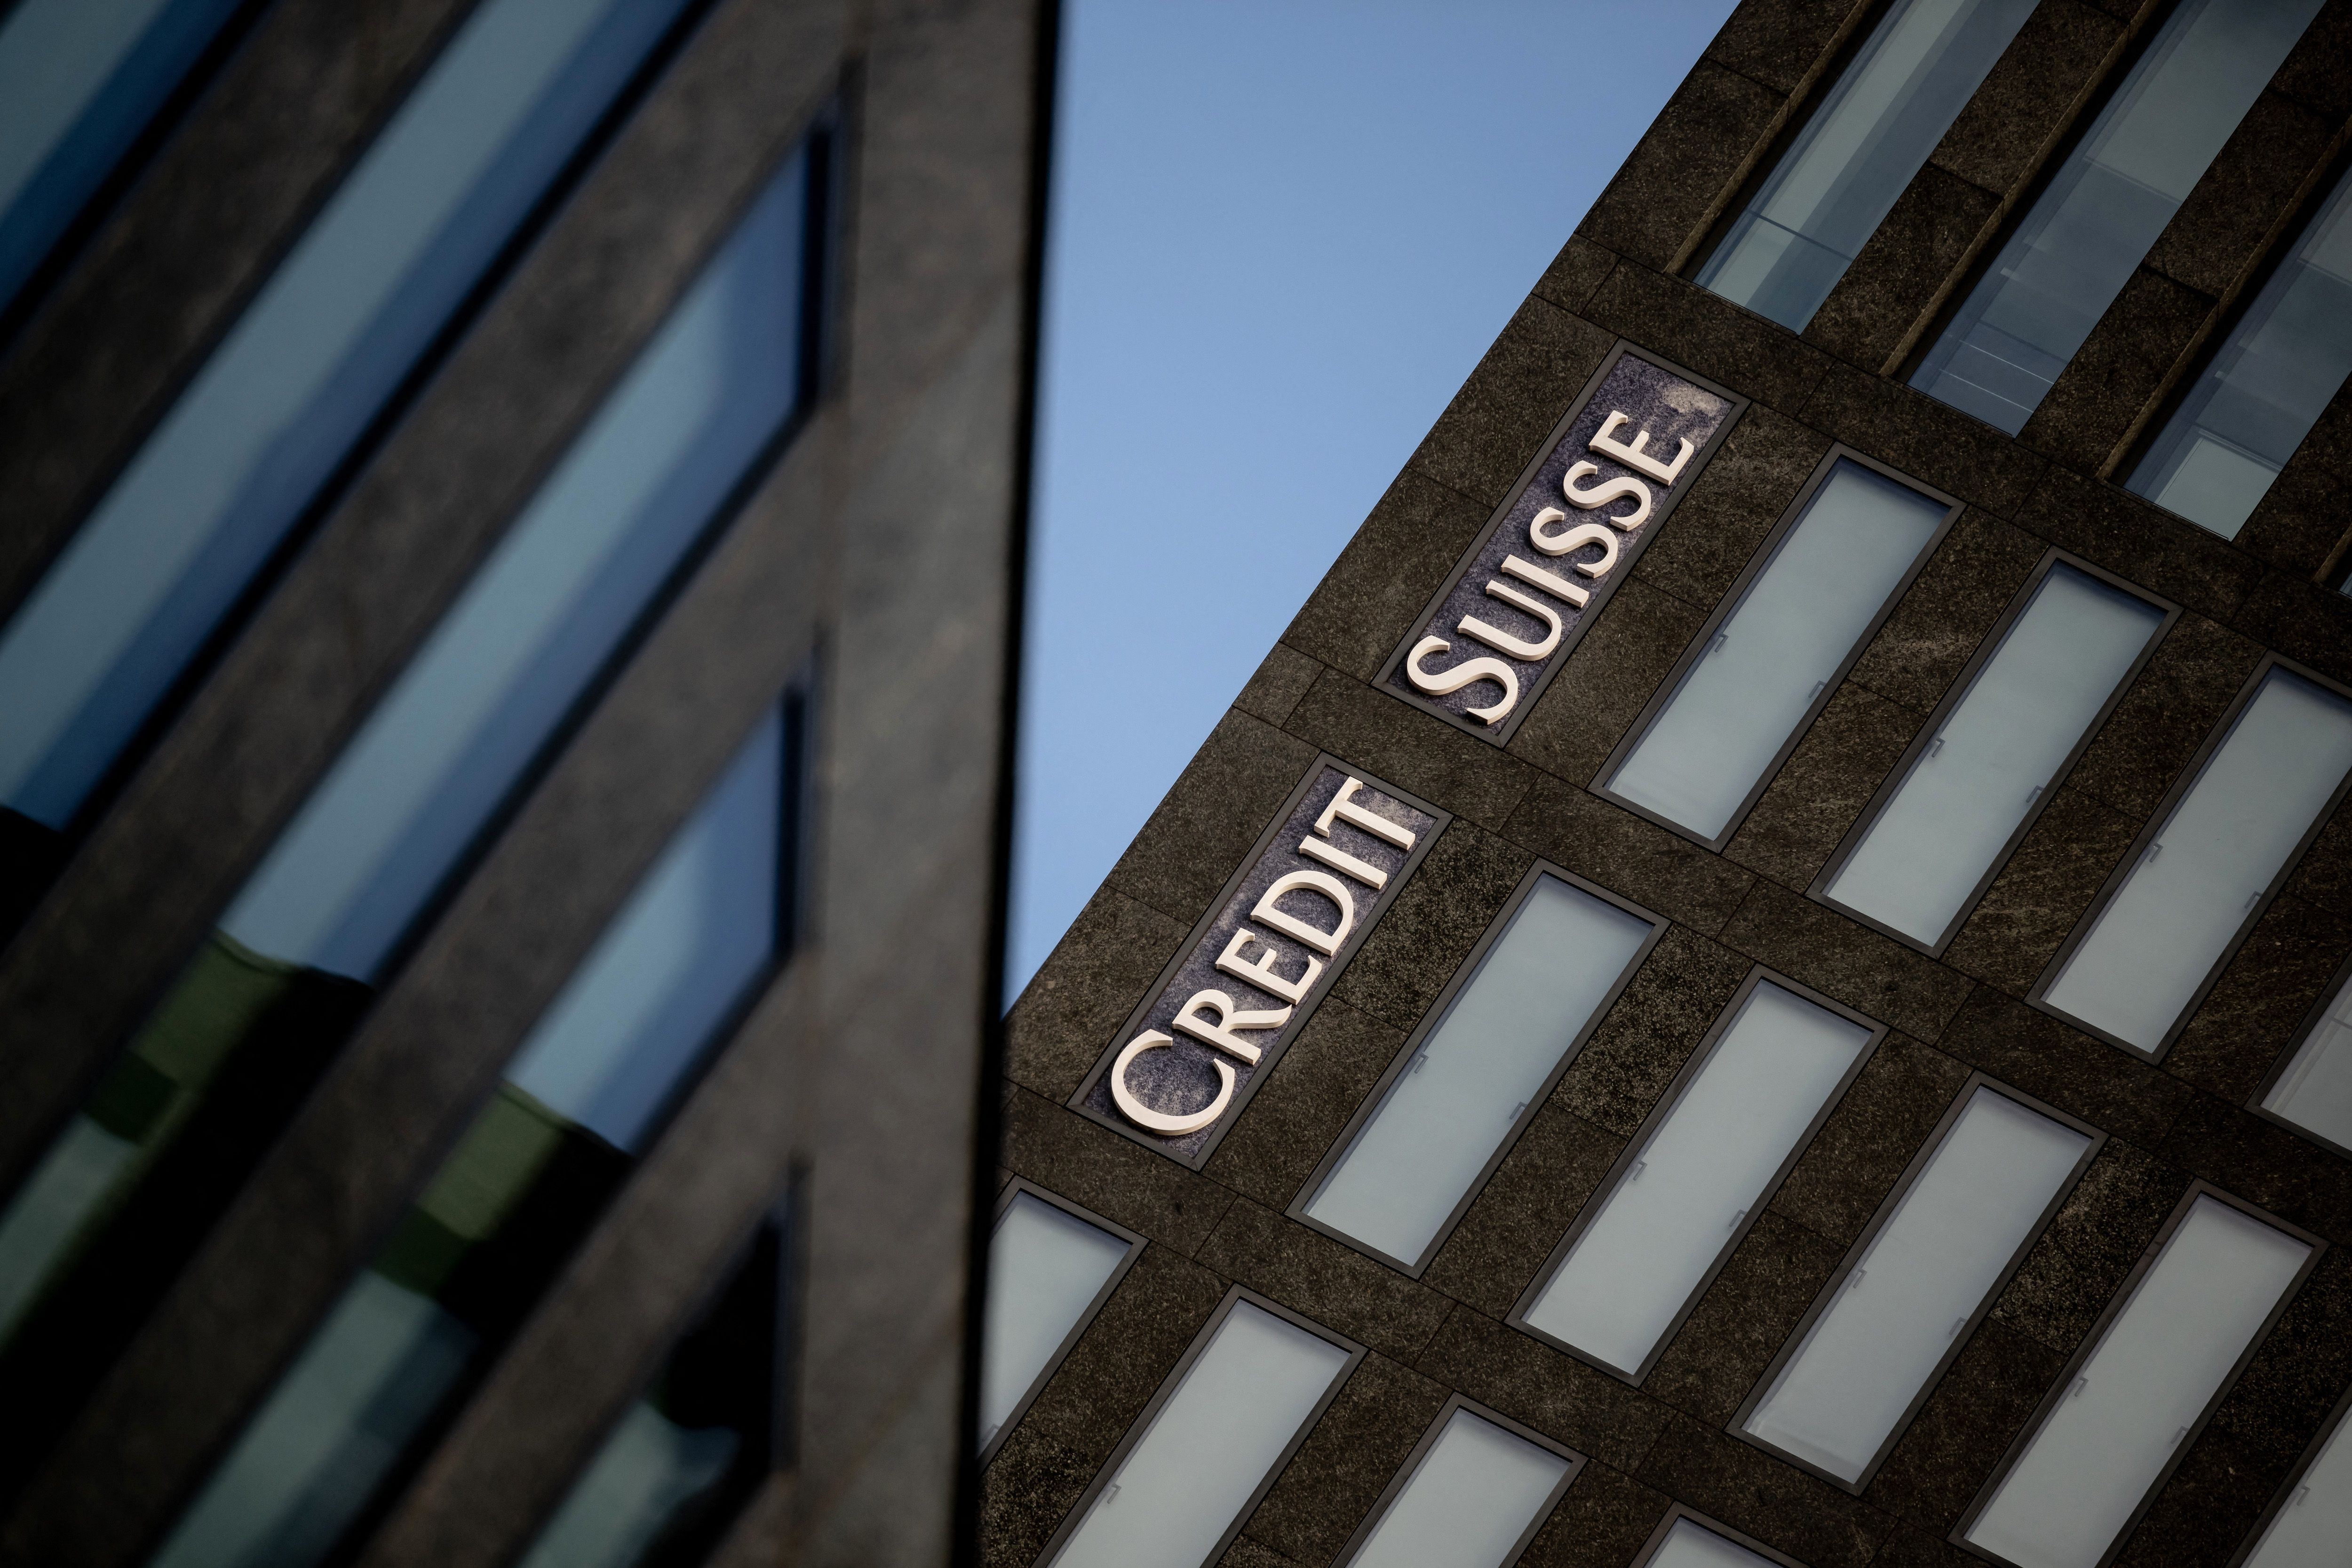 Credit Suisse building